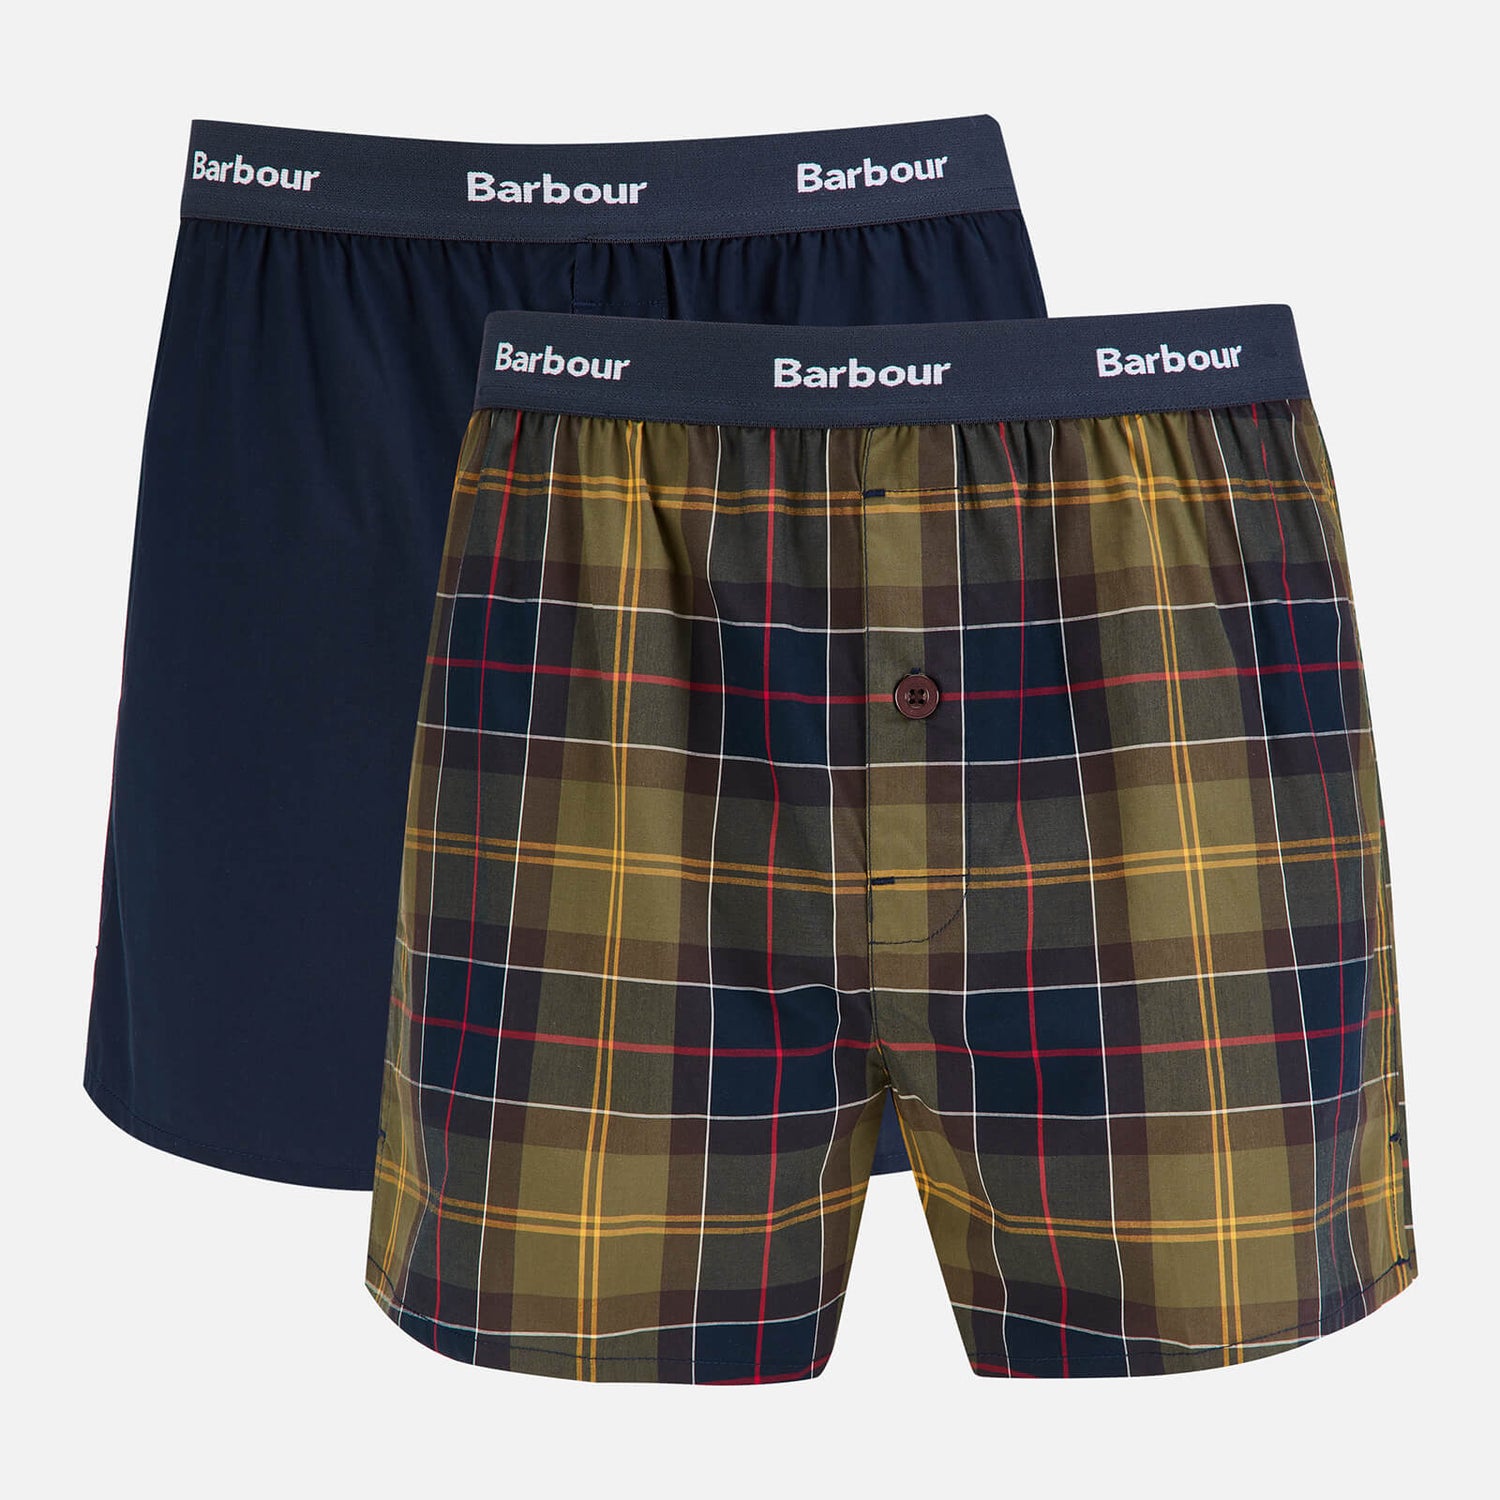 Barbour Heritage Men's 2-Pack Boxer Shorts - Classic Tartan/Navy